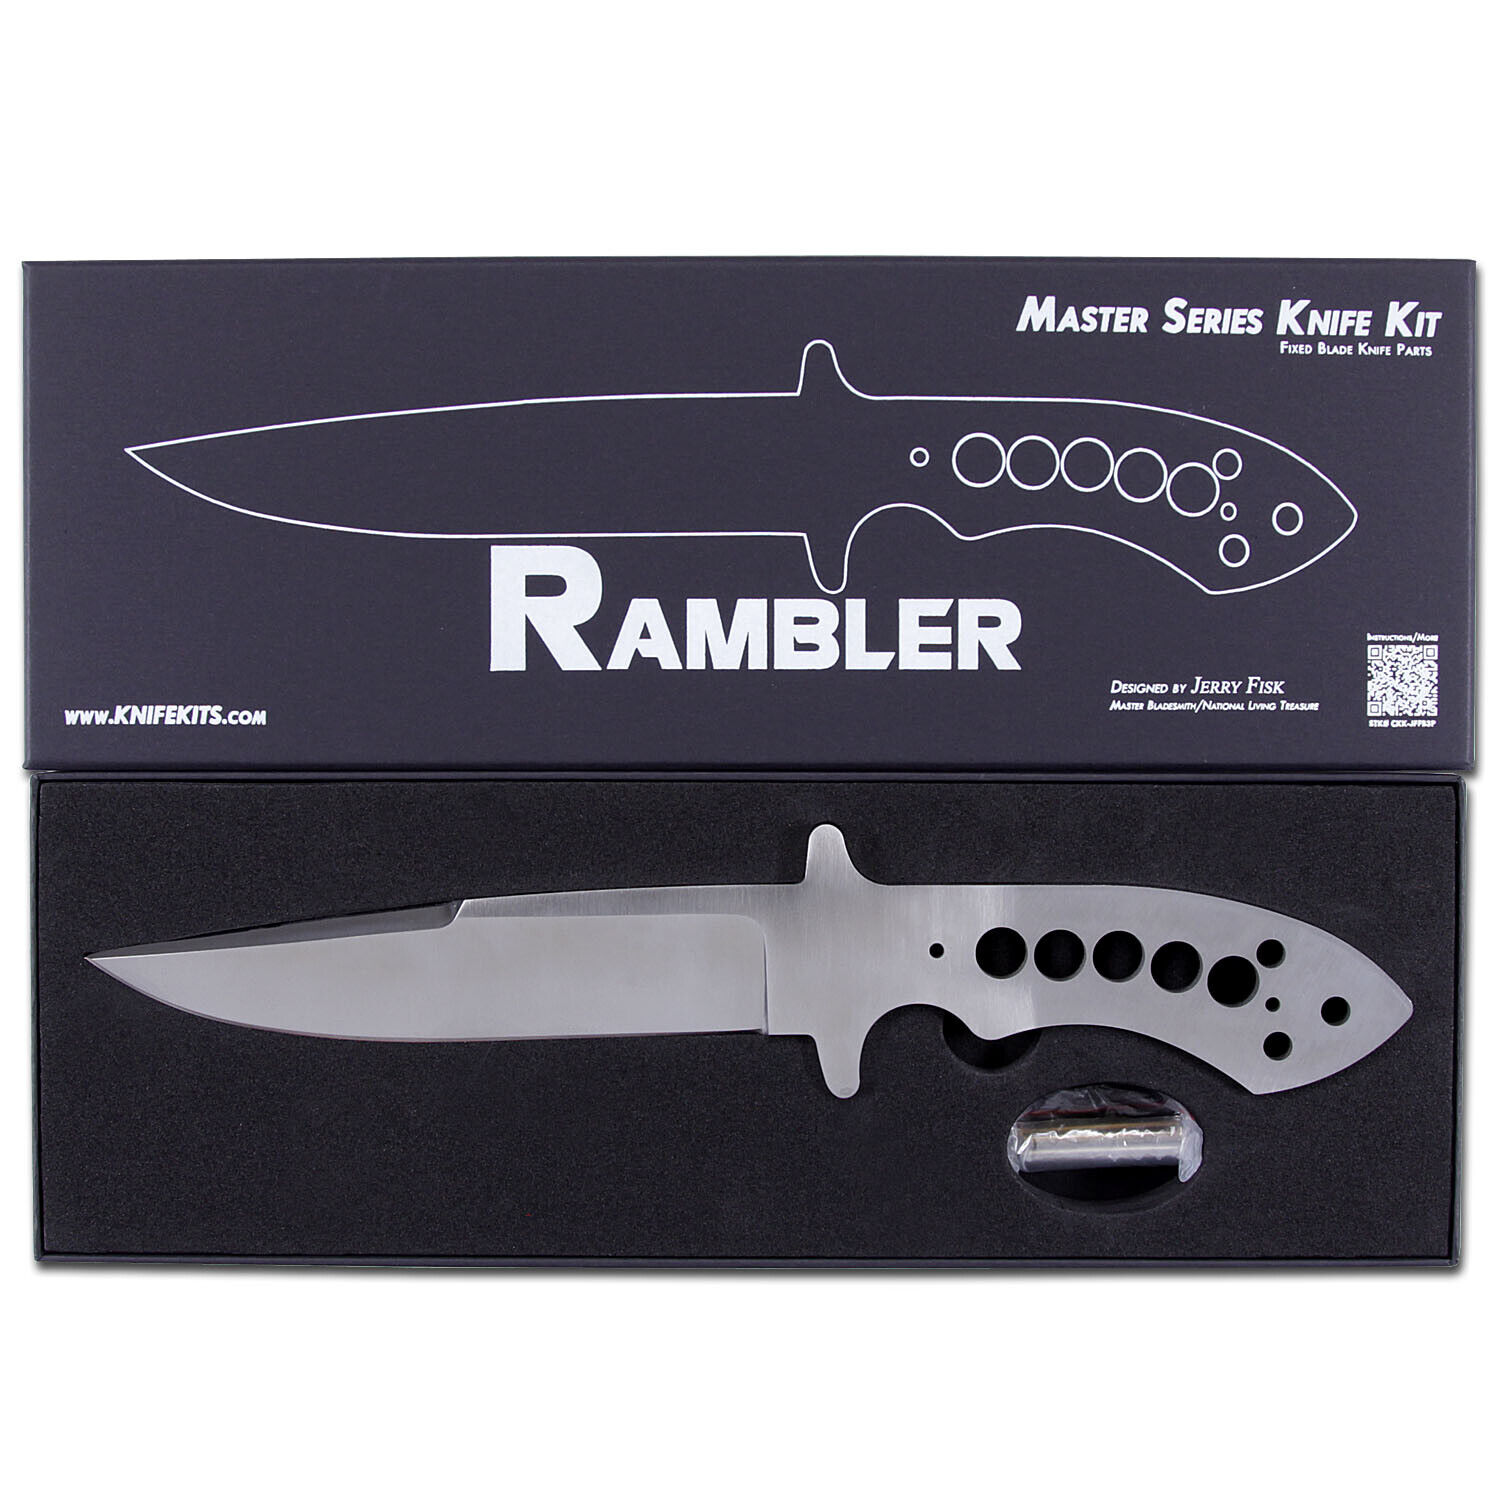 Rambler - Master Series Fixed Blade Knife Kit - (Jerry Fisk, MS - USA Design)